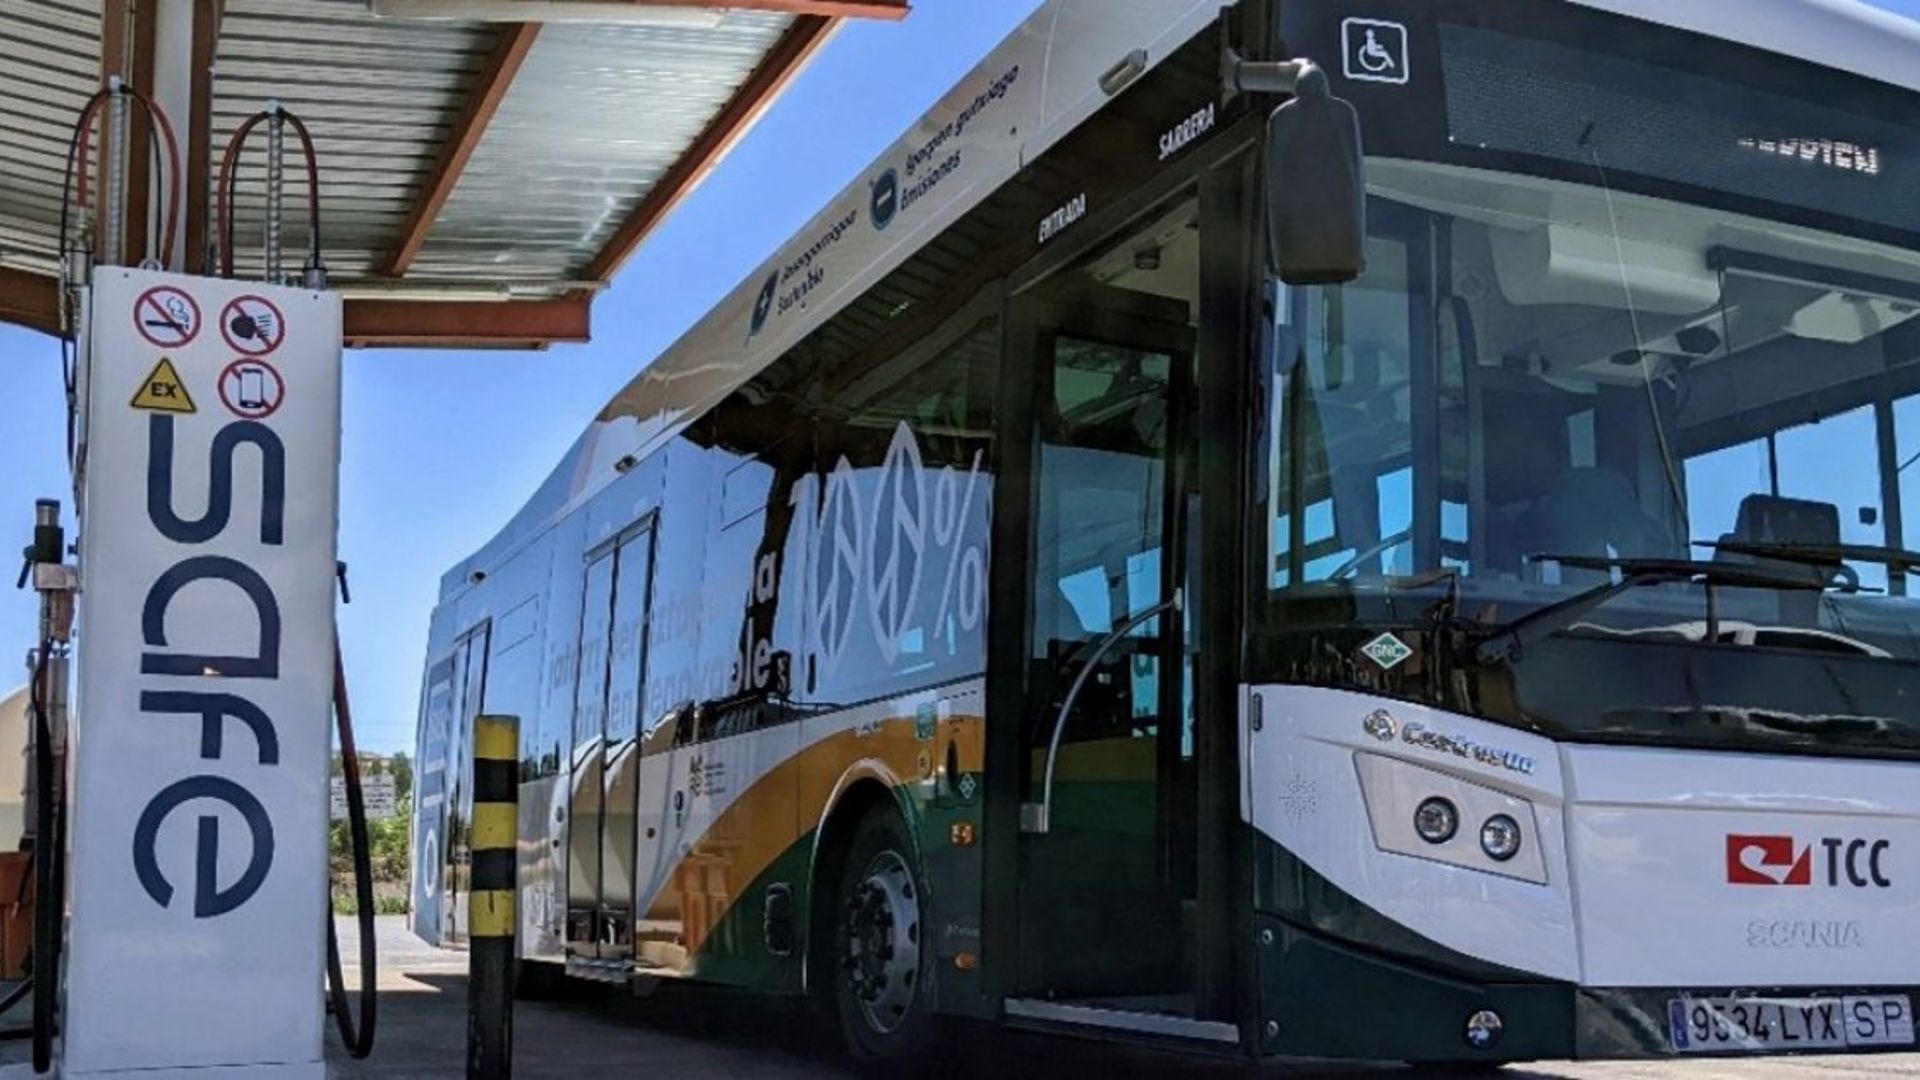 Public operator in Spain runs Scania buses on public waste